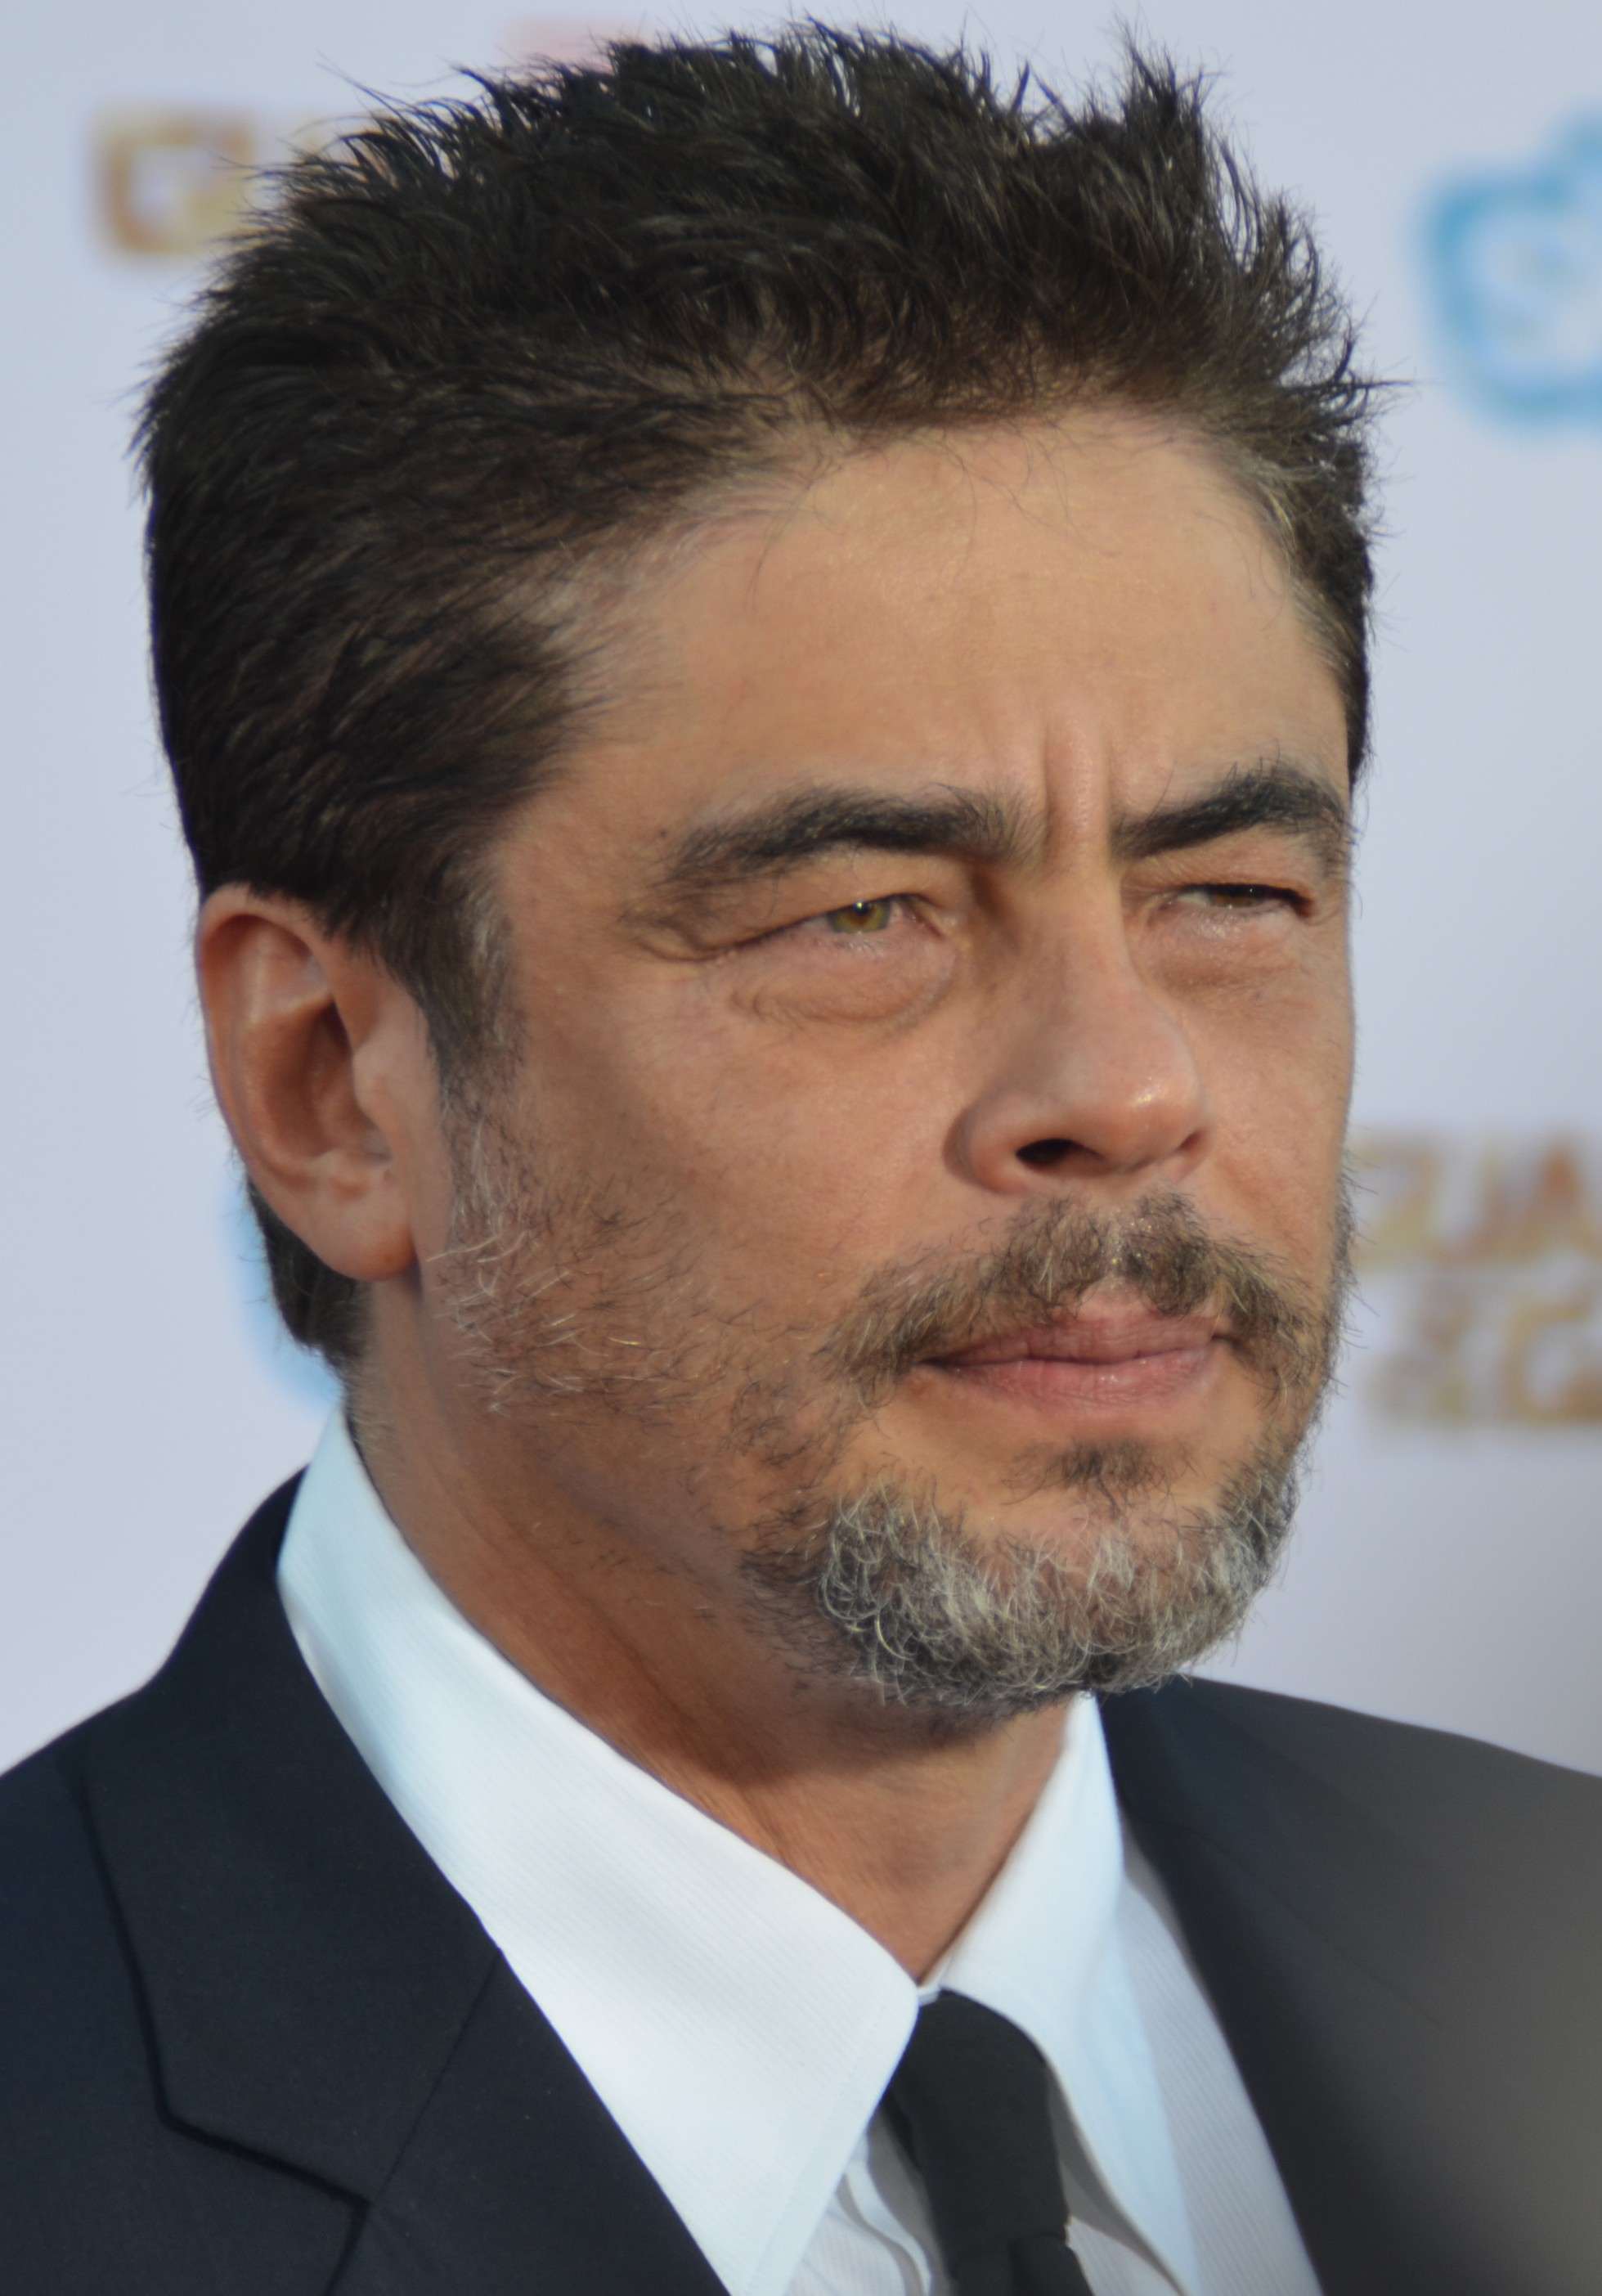 Benicio_Del_Toro_-_Guardians_of_the_Galaxy_premiere_-_July_2014_%28cropped%29.jpg